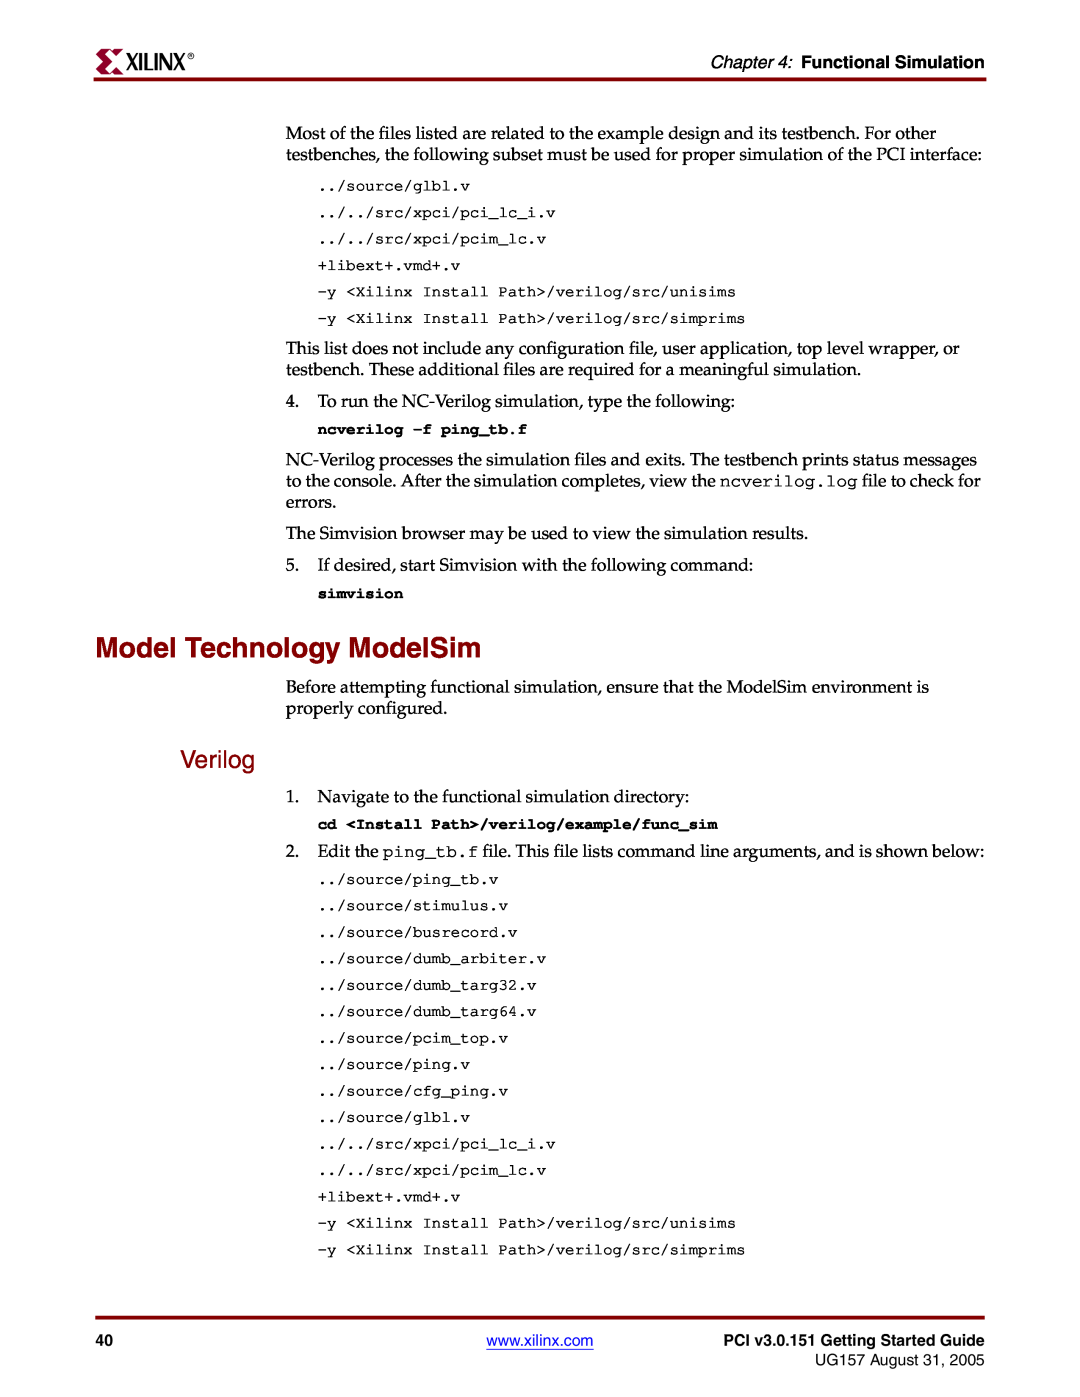 Xilinx PCI v3.0 manual Model Technology ModelSim, Verilog, Functional Simulation 